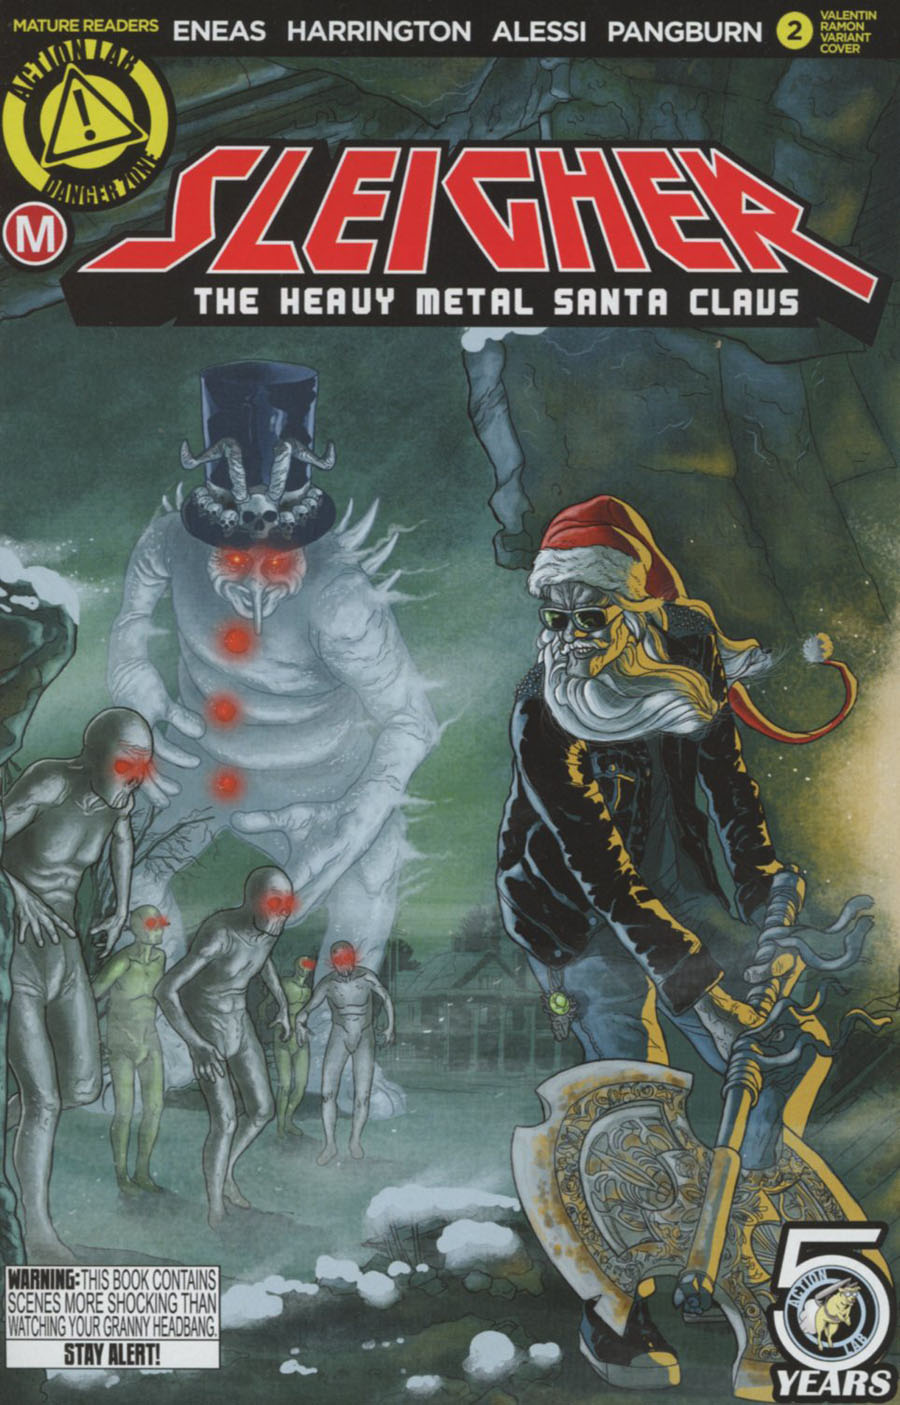 Sleigher Heavy Metal Santa Claus #2 Cover B Variant Valentin Ramon Cover